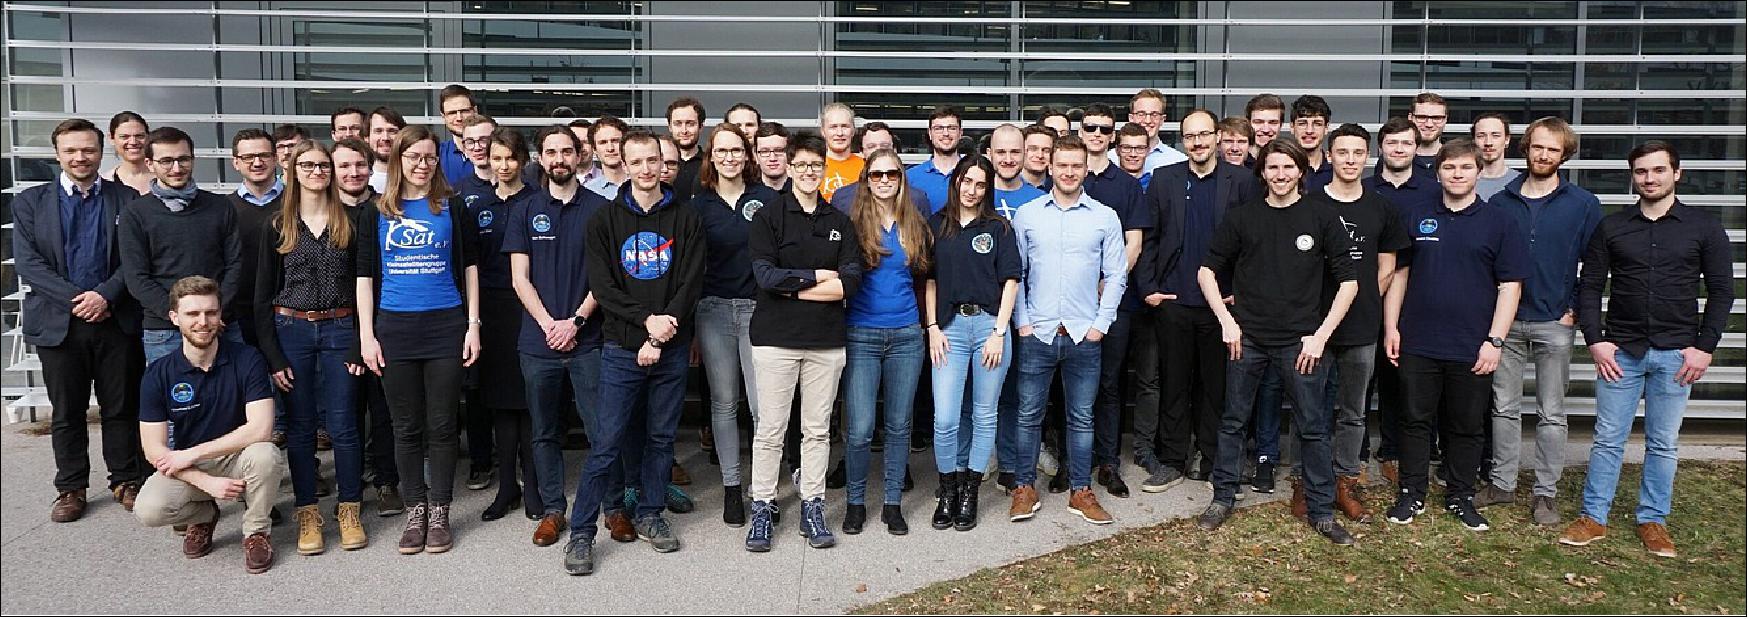 Figure 2: Photo of the SOURCE Team at the University of StuttGart in 2019 (image credit: University of Stuttgart)